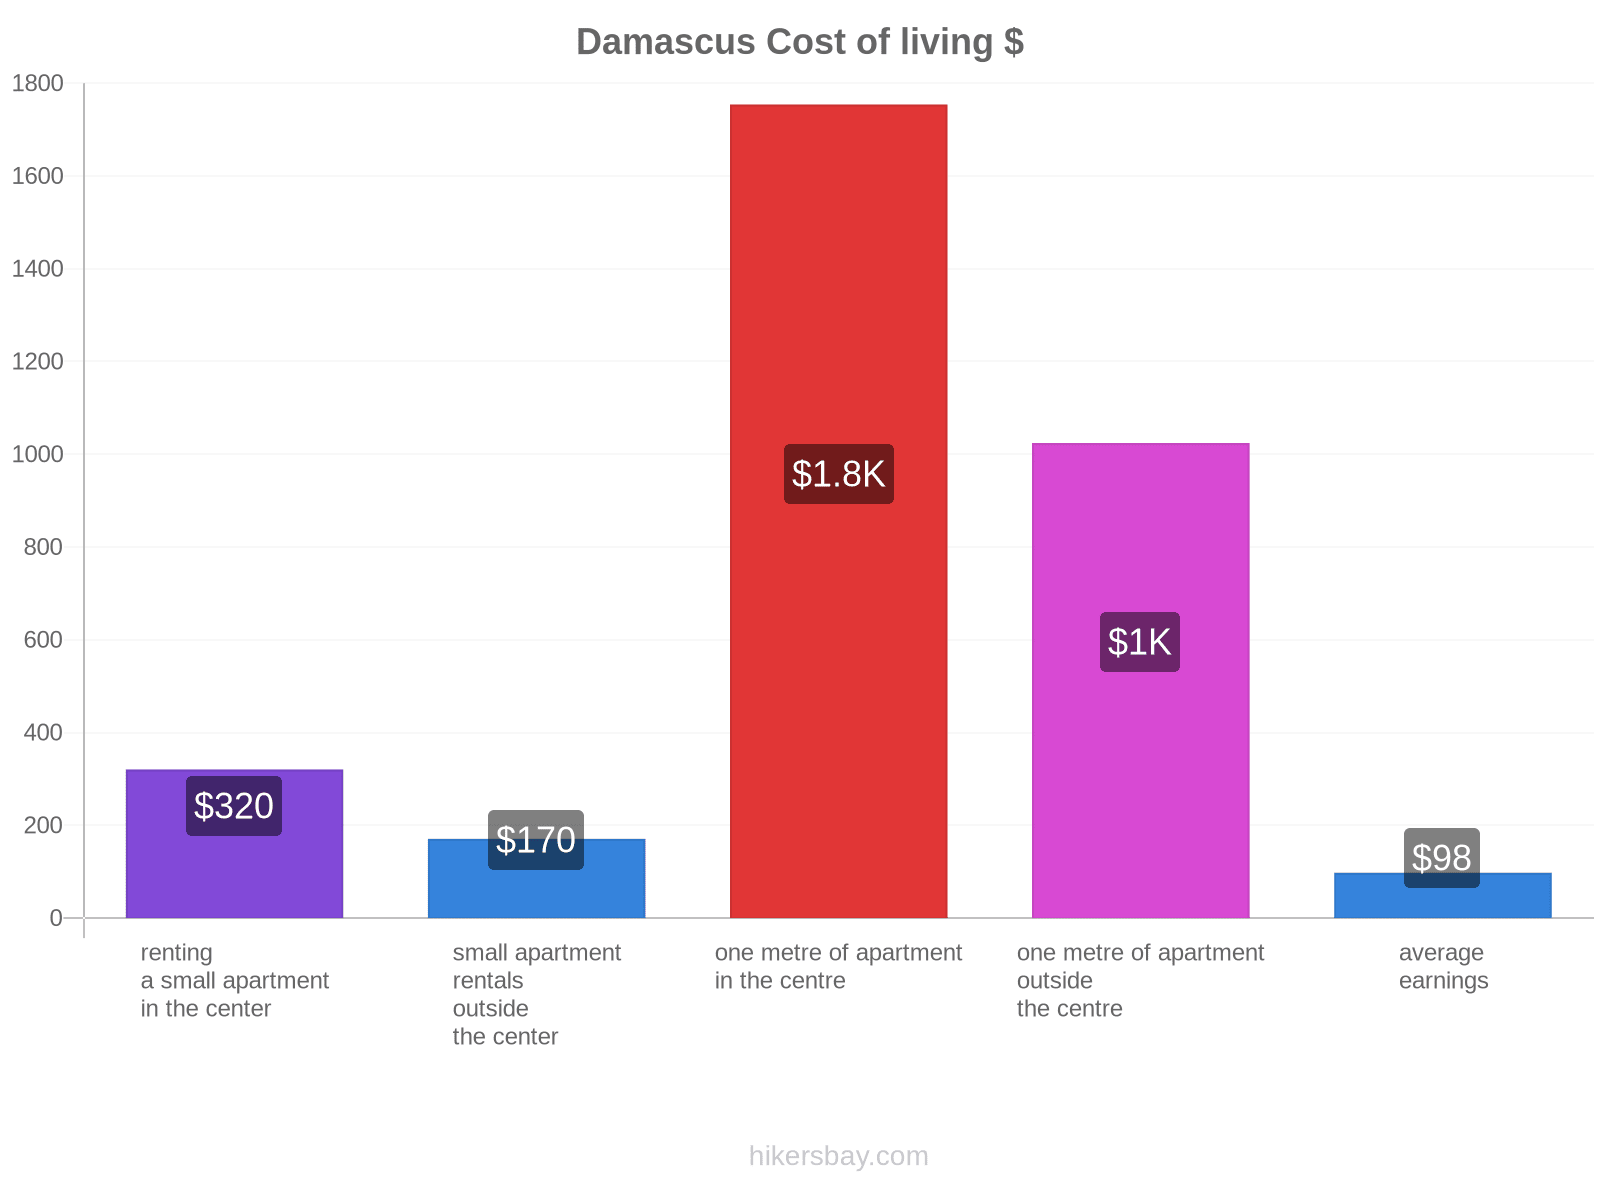 Damascus cost of living hikersbay.com